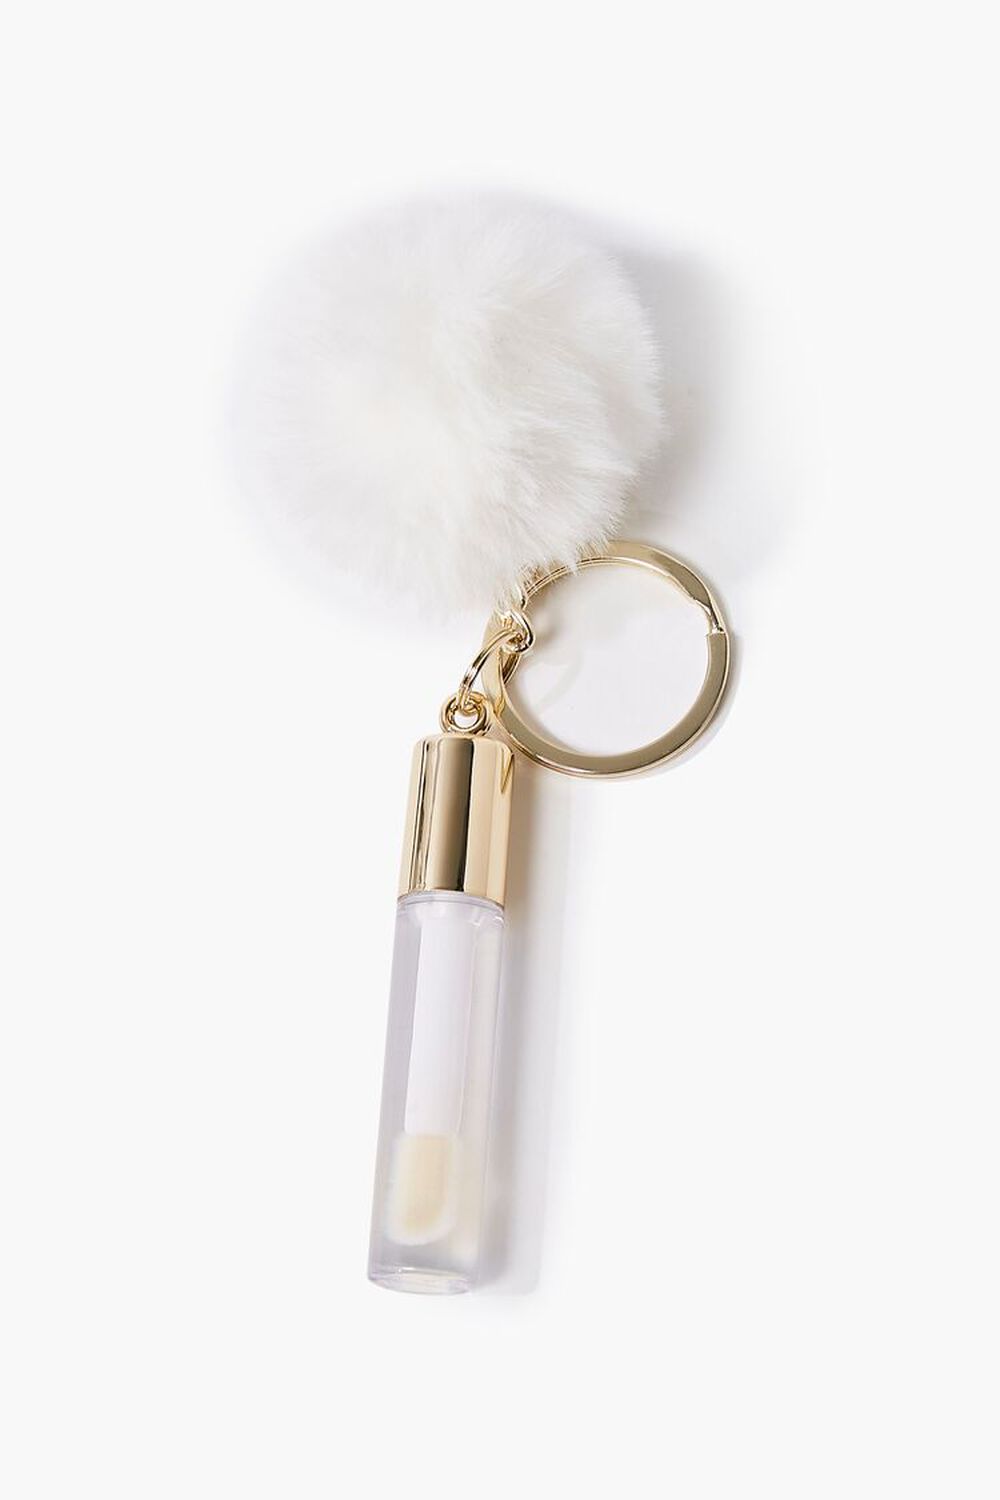 CLEAR Portable Lip Gloss Key Chain, image 1